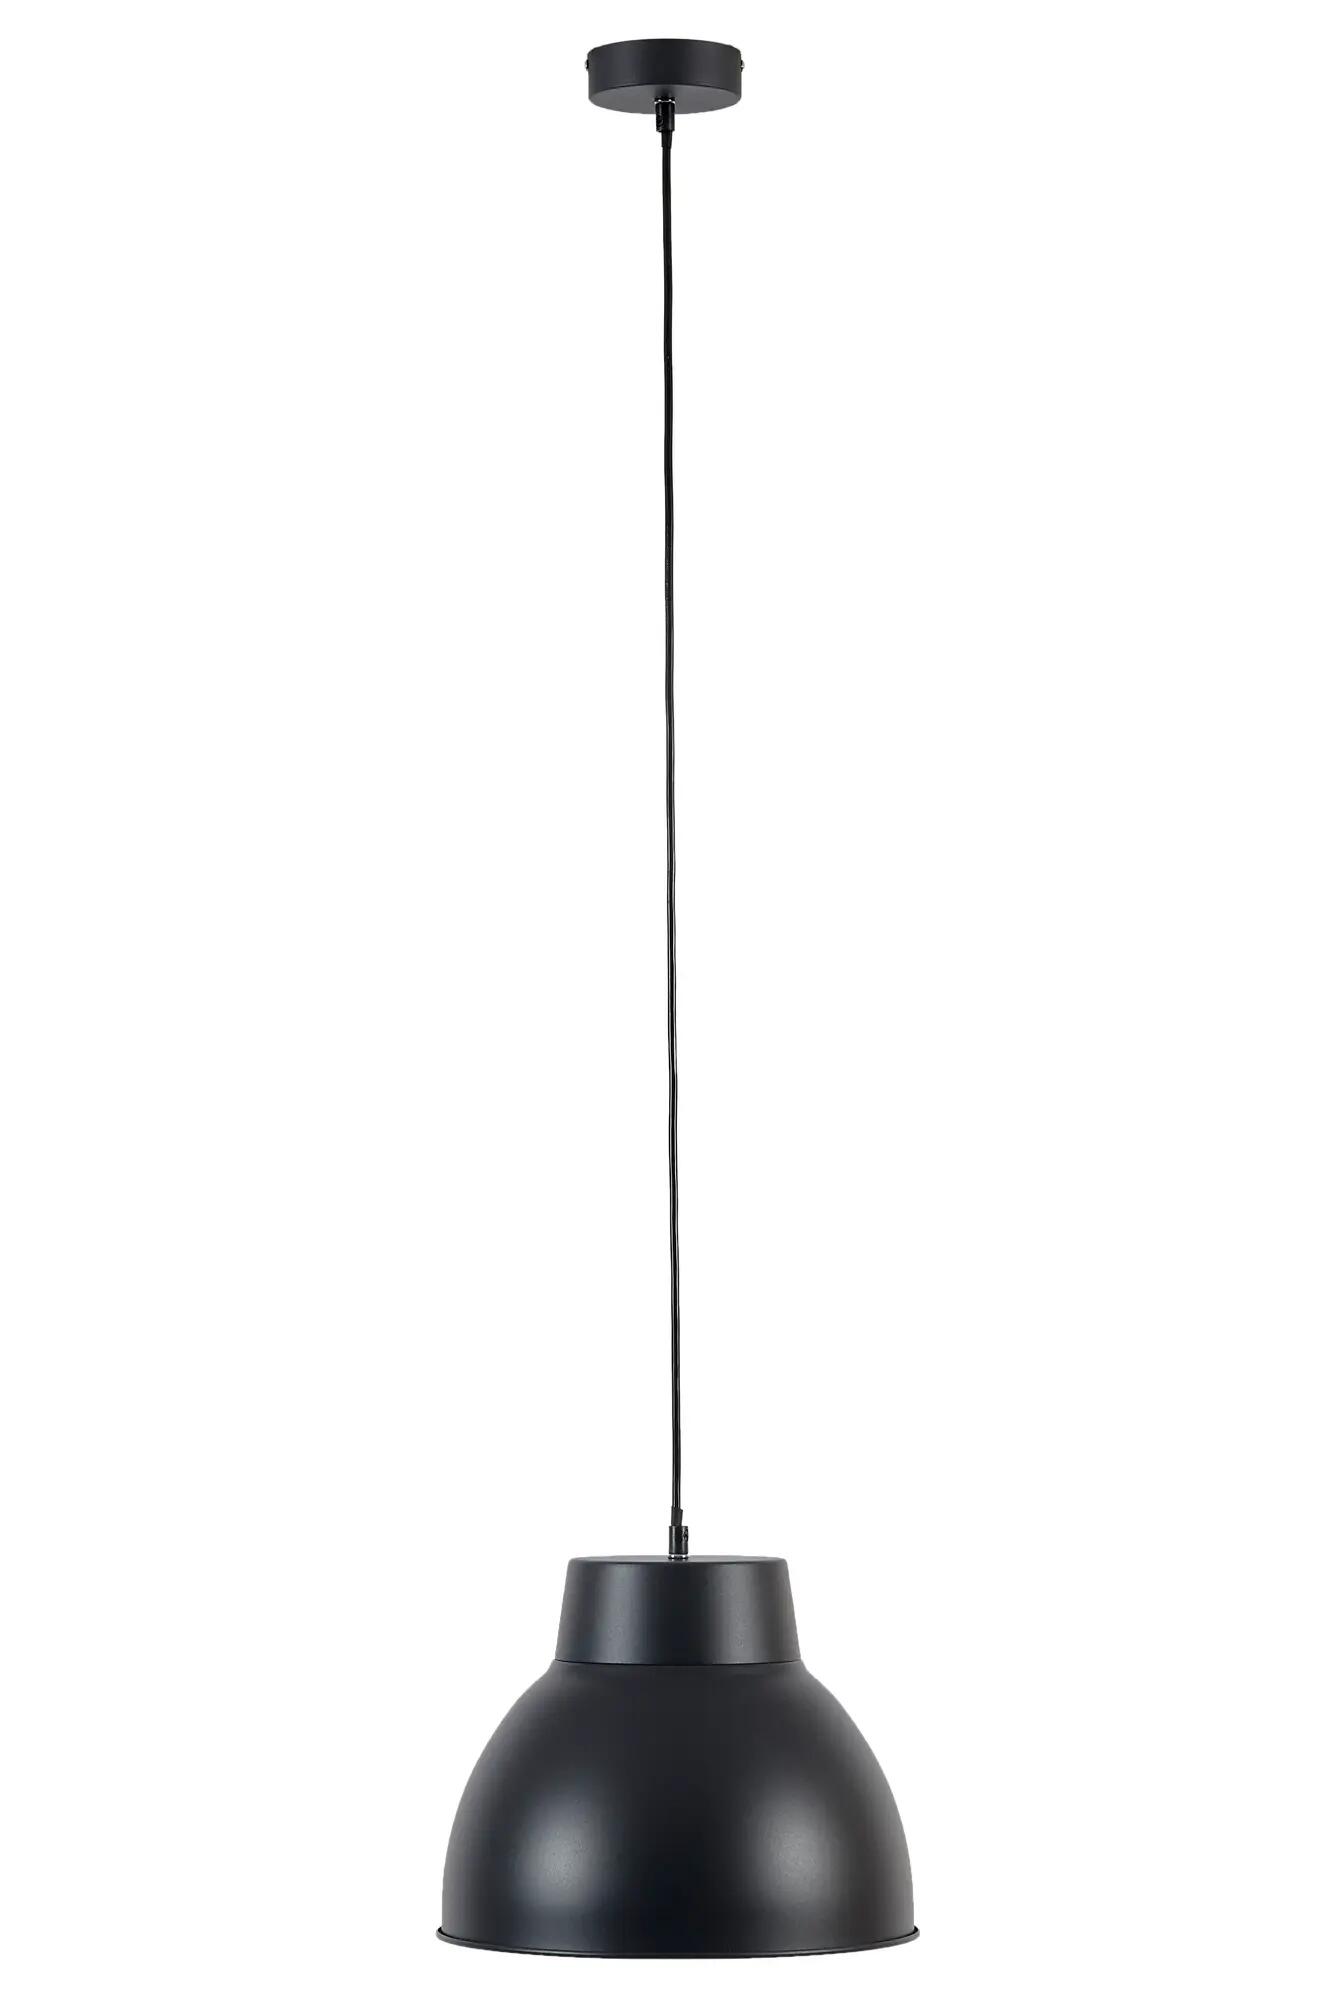 Lampadario Industriale Mezzo nero in metallo, D. 31 cm, INSPIRE - 13